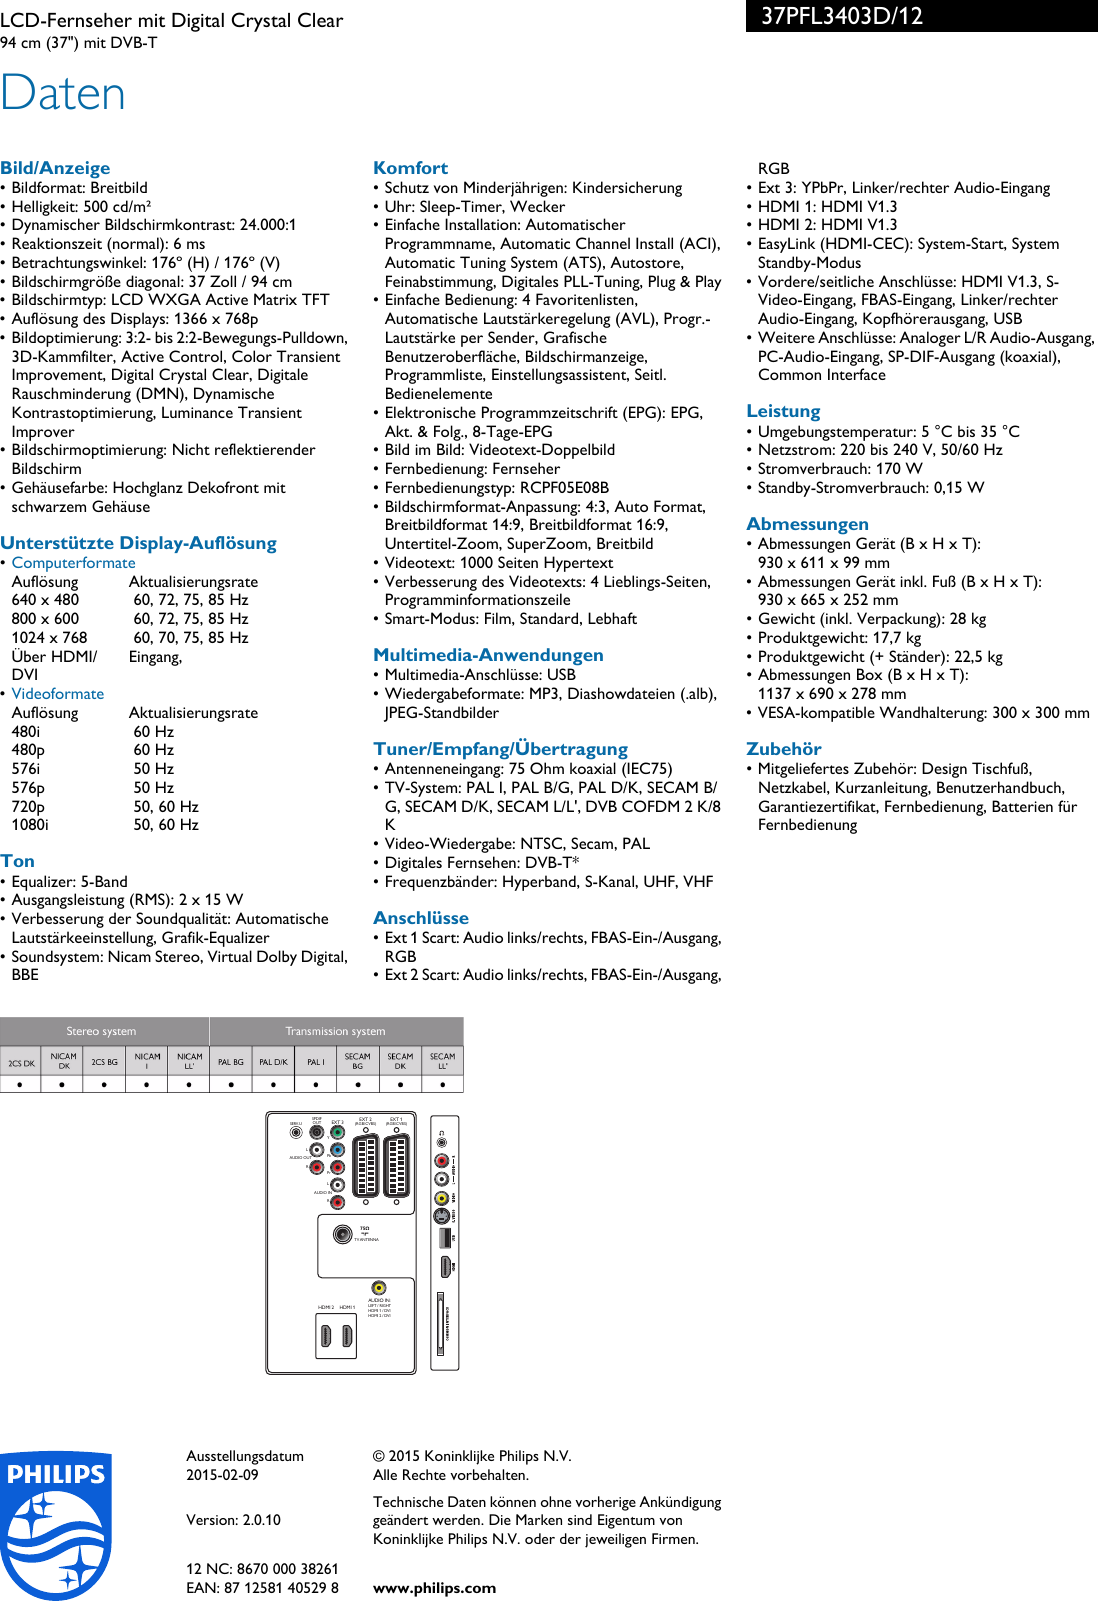 Page 3 of 3 - Philips 37PFL3403D/12 Leaflet 37PFL3403D_12 Released Germany (German)  User Manual Datenblatt 37pfl3403d 12 Pss Deude